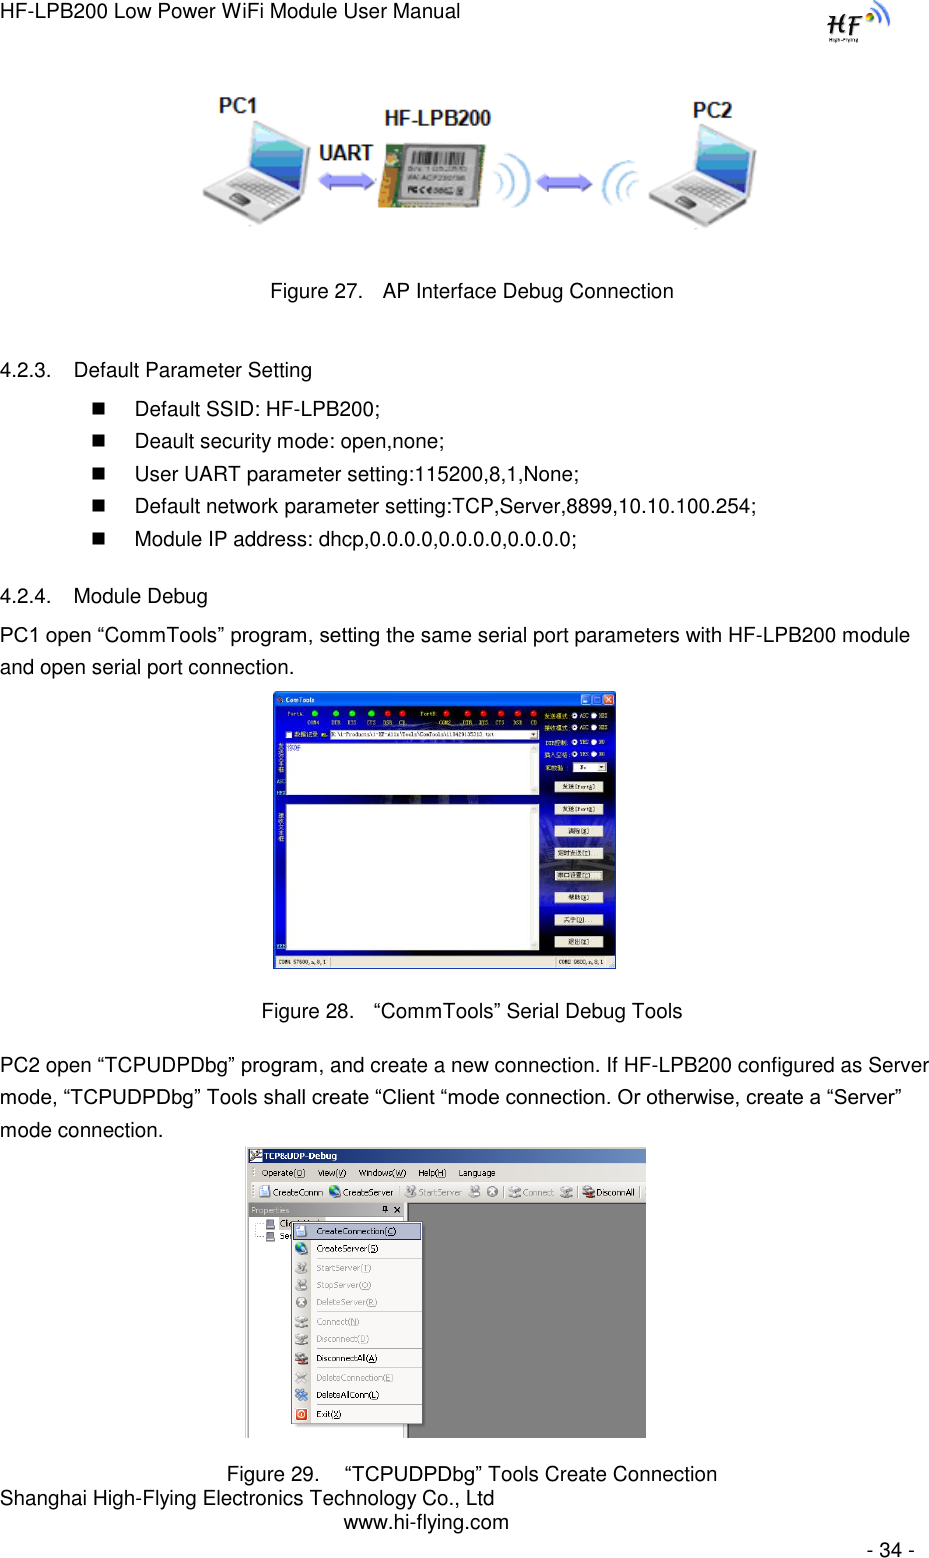 HF-LPB200 Low Power WiFi Module User Manual Shanghai High-Flying Electronics Technology Co., Ltd www.hi-flying.com   - 34 -                    Figure 27. AP Interface Debug Connection 4.2.3. Default Parameter Setting  Default SSID: HF-LPB200;  Deault security mode: open,none;  User UART parameter setting:115200,8,1,None;  Default network parameter setting:TCP,Server,8899,10.10.100.254;  Module IP address: dhcp,0.0.0.0,0.0.0.0,0.0.0.0; 4.2.4. Module Debug PC1 open “CommTools” program, setting the same serial port parameters with HF-LPB200 module and open serial port connection.   Figure 28. “CommTools” Serial Debug Tools PC2 open “TCPUDPDbg” program, and create a new connection. If HF-LPB200 configured as Server mode, “TCPUDPDbg” Tools shall create “Client “mode connection. Or otherwise, create a “Server” mode connection.    Figure 29.  “TCPUDPDbg” Tools Create Connection 